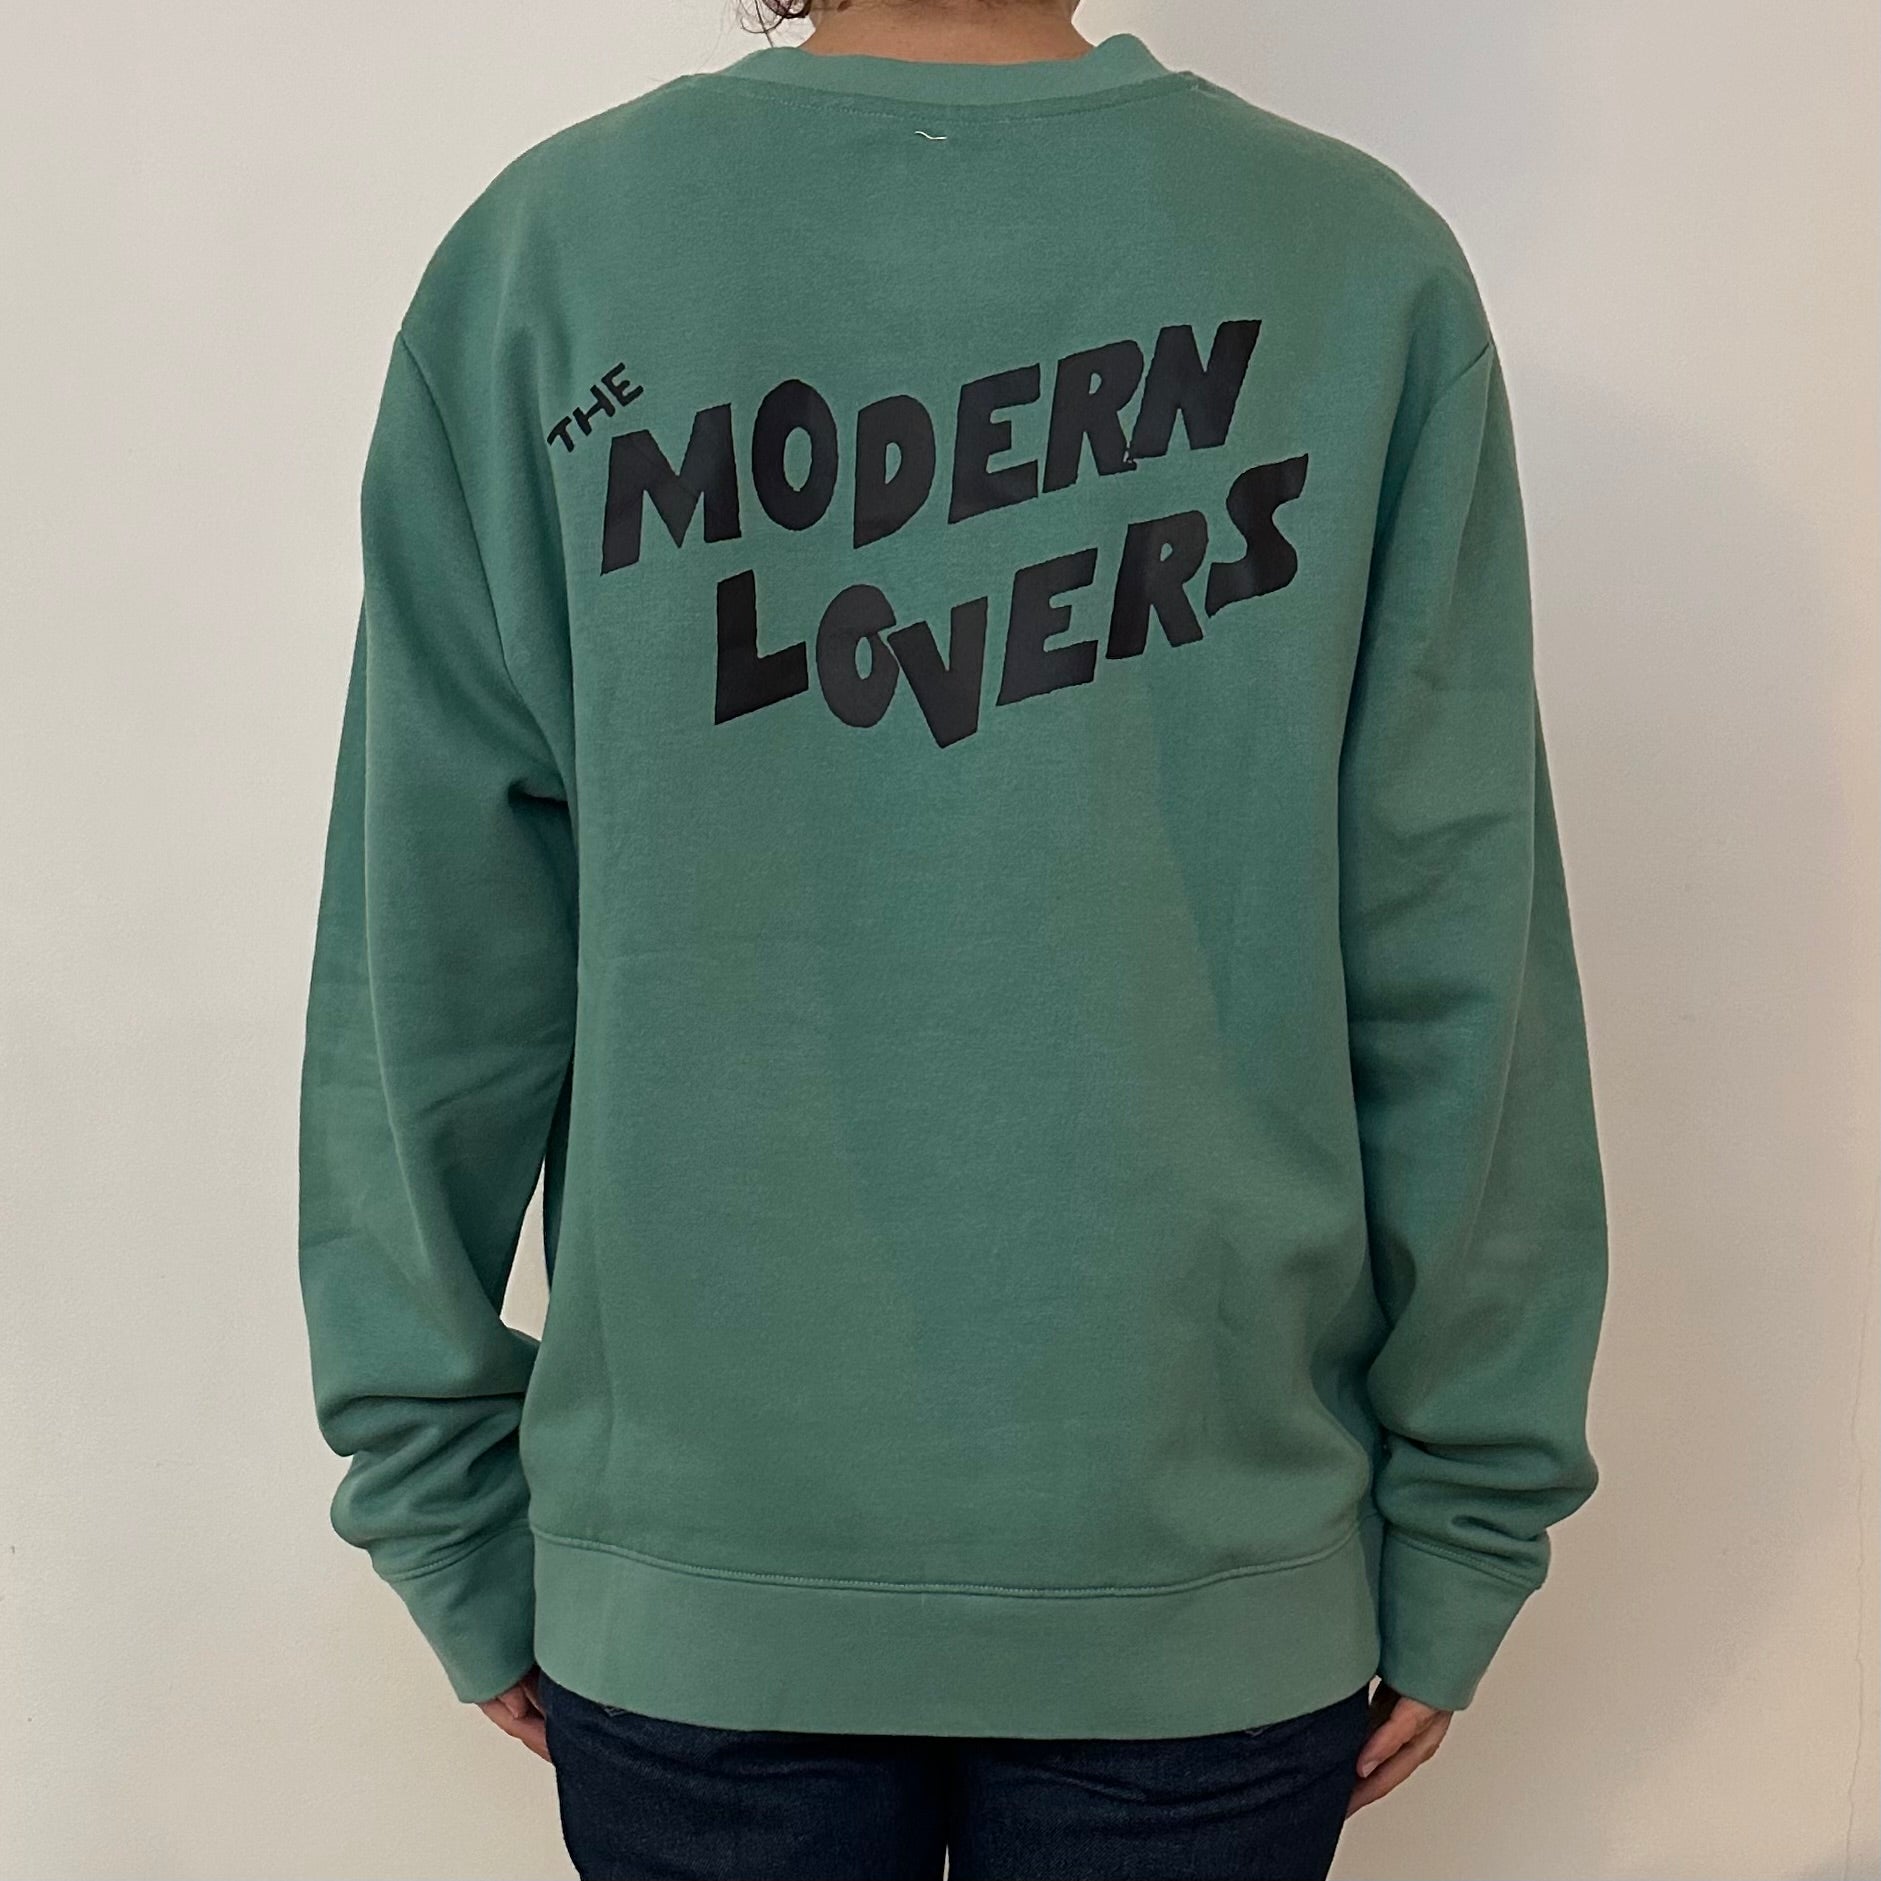 Modern Lovers sweatshirt